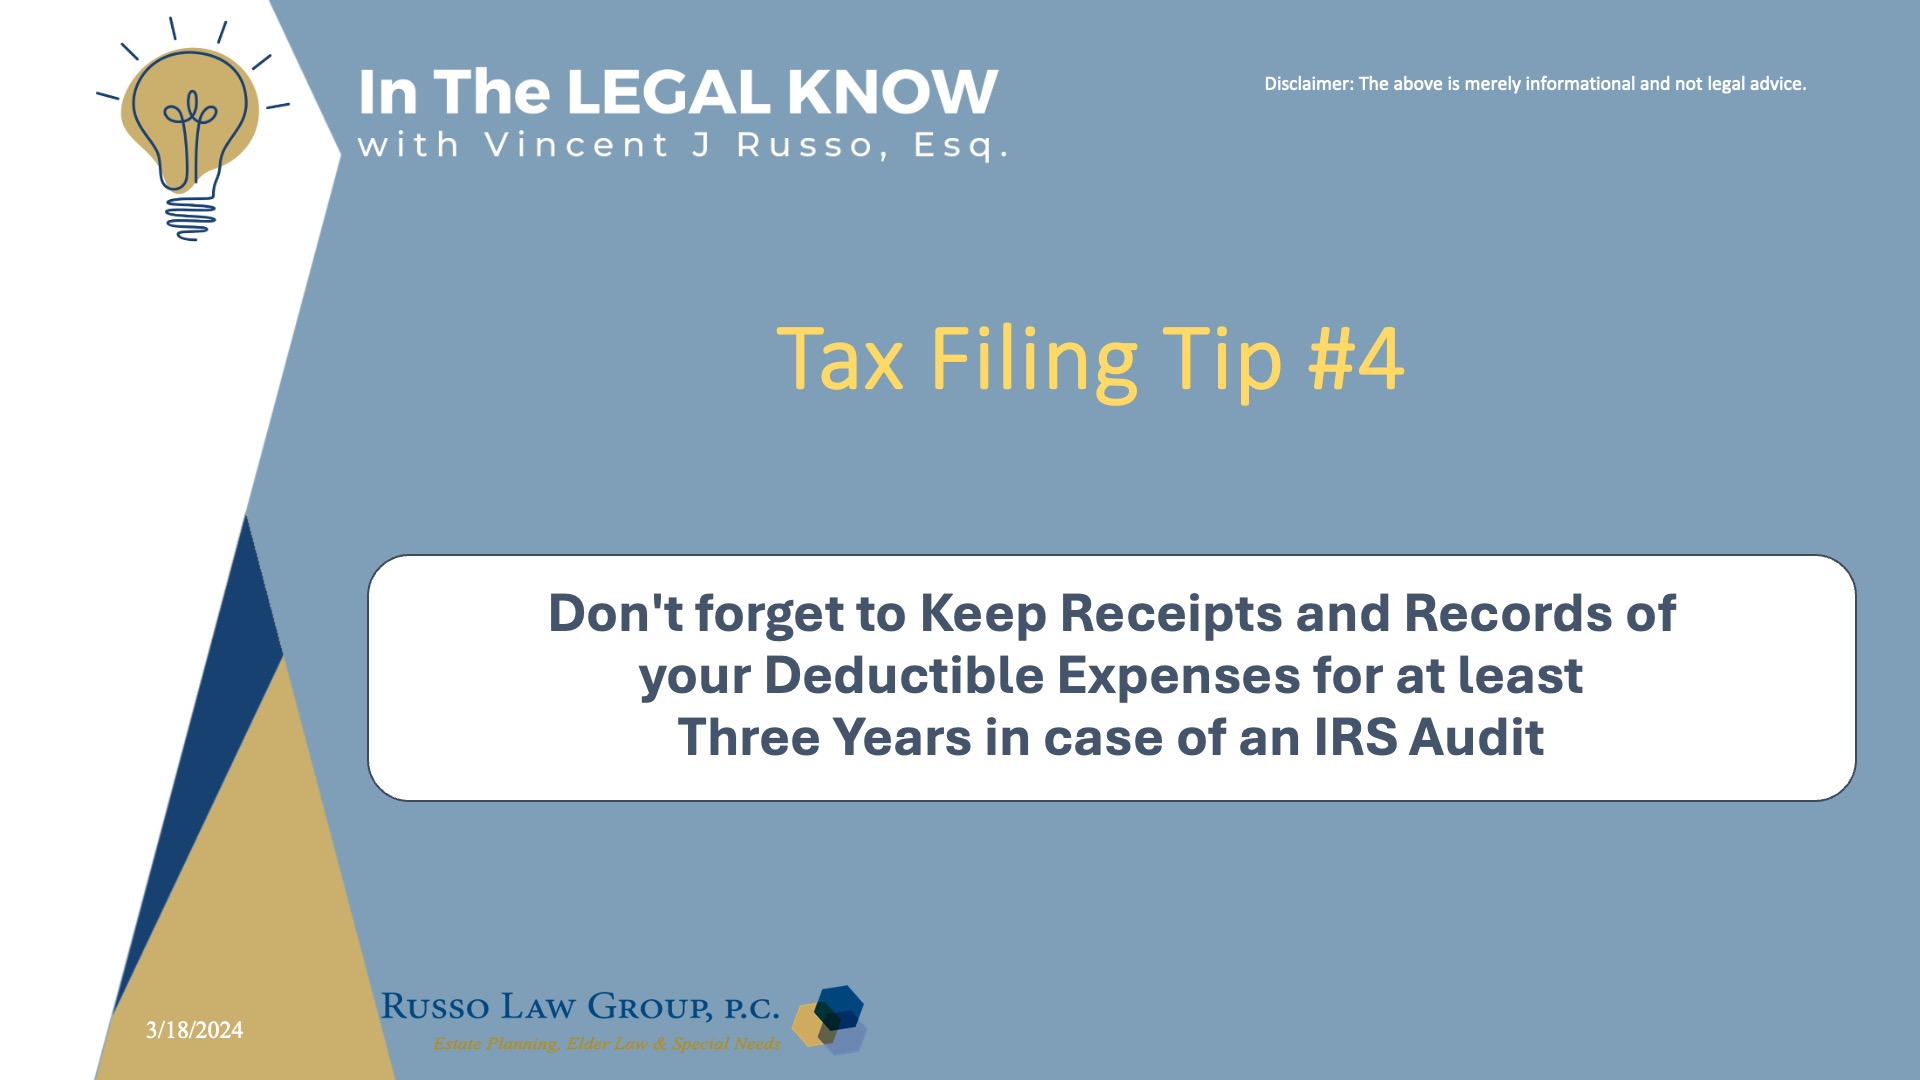 Tax Filing Tip #4